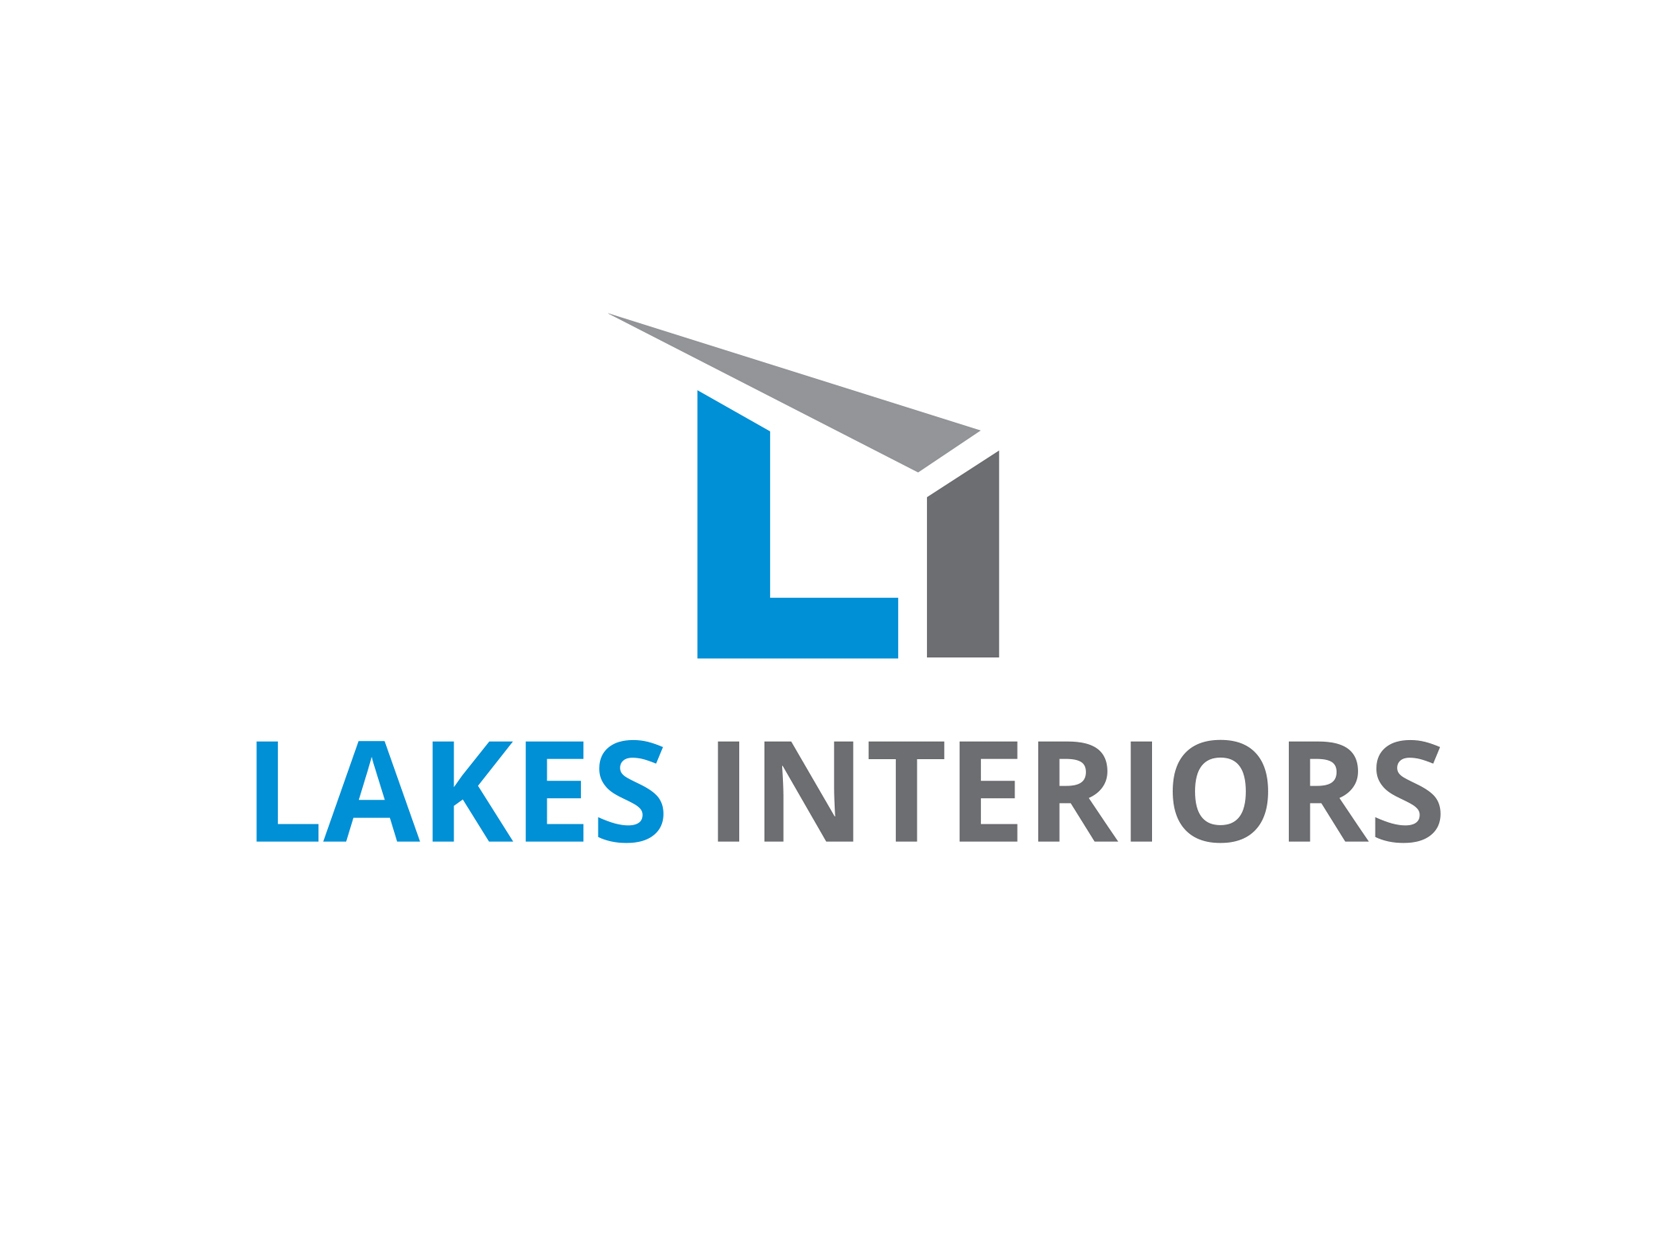 lakes-logo